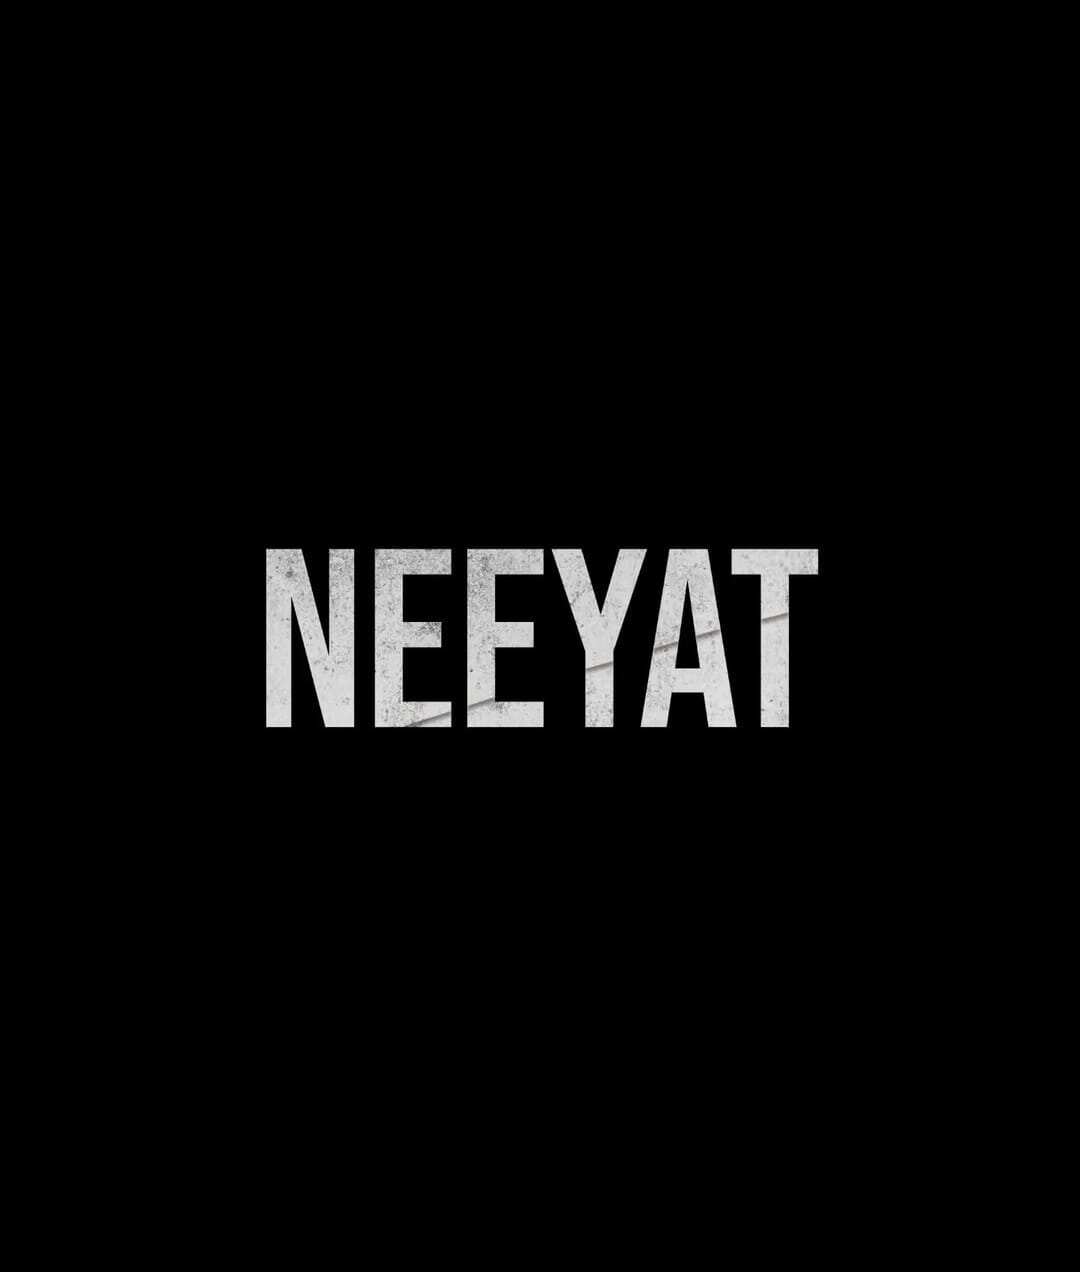 Neeyat (Co-production)